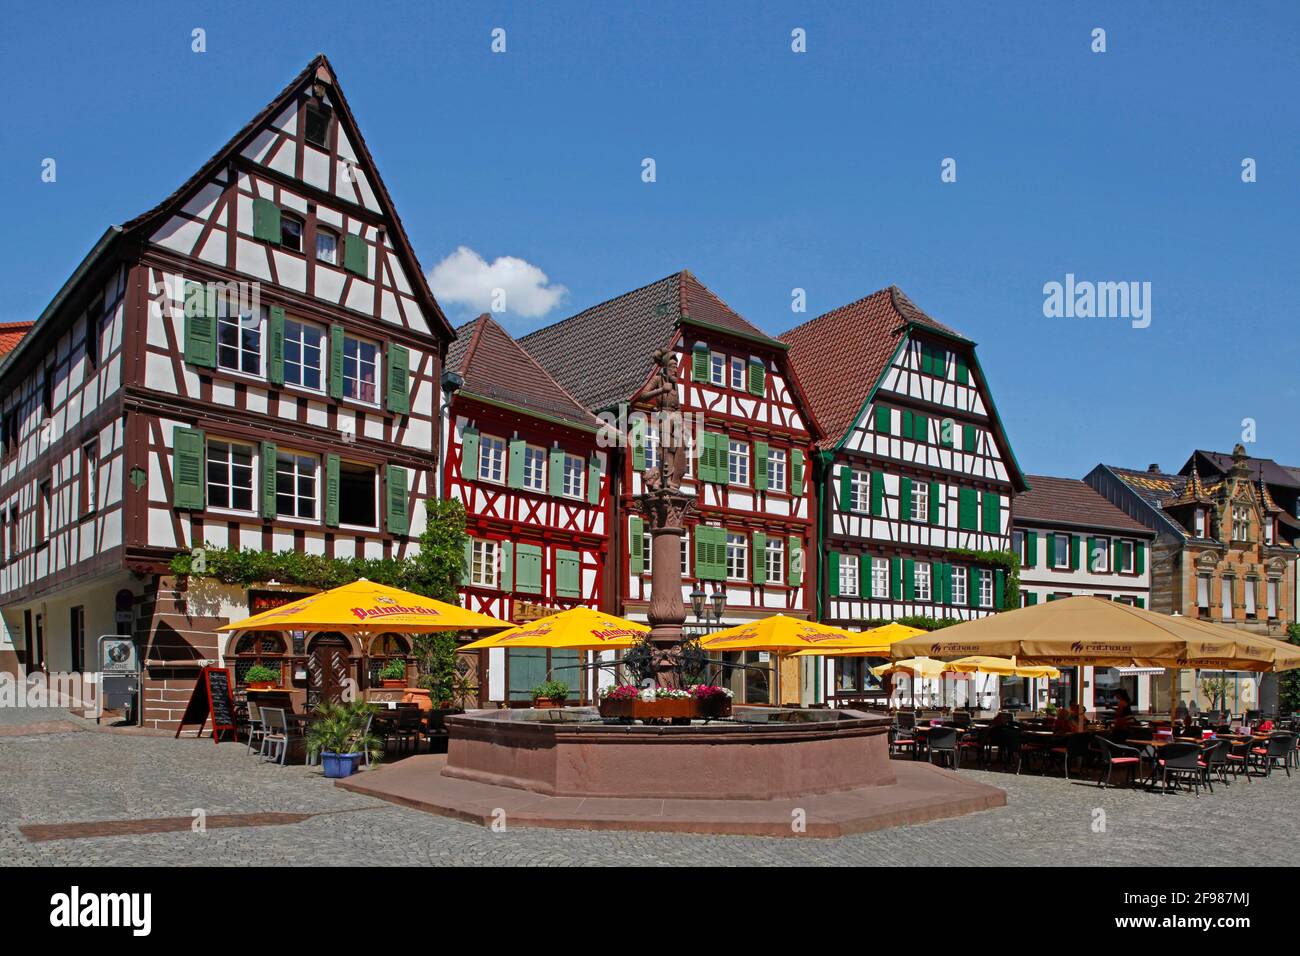 Marketplace, market fountain, half-timbered houses, Bretten, Kraichgau, Ldkrs.Karlsruhe, Baden-Württemberg, Germany Stock Photo